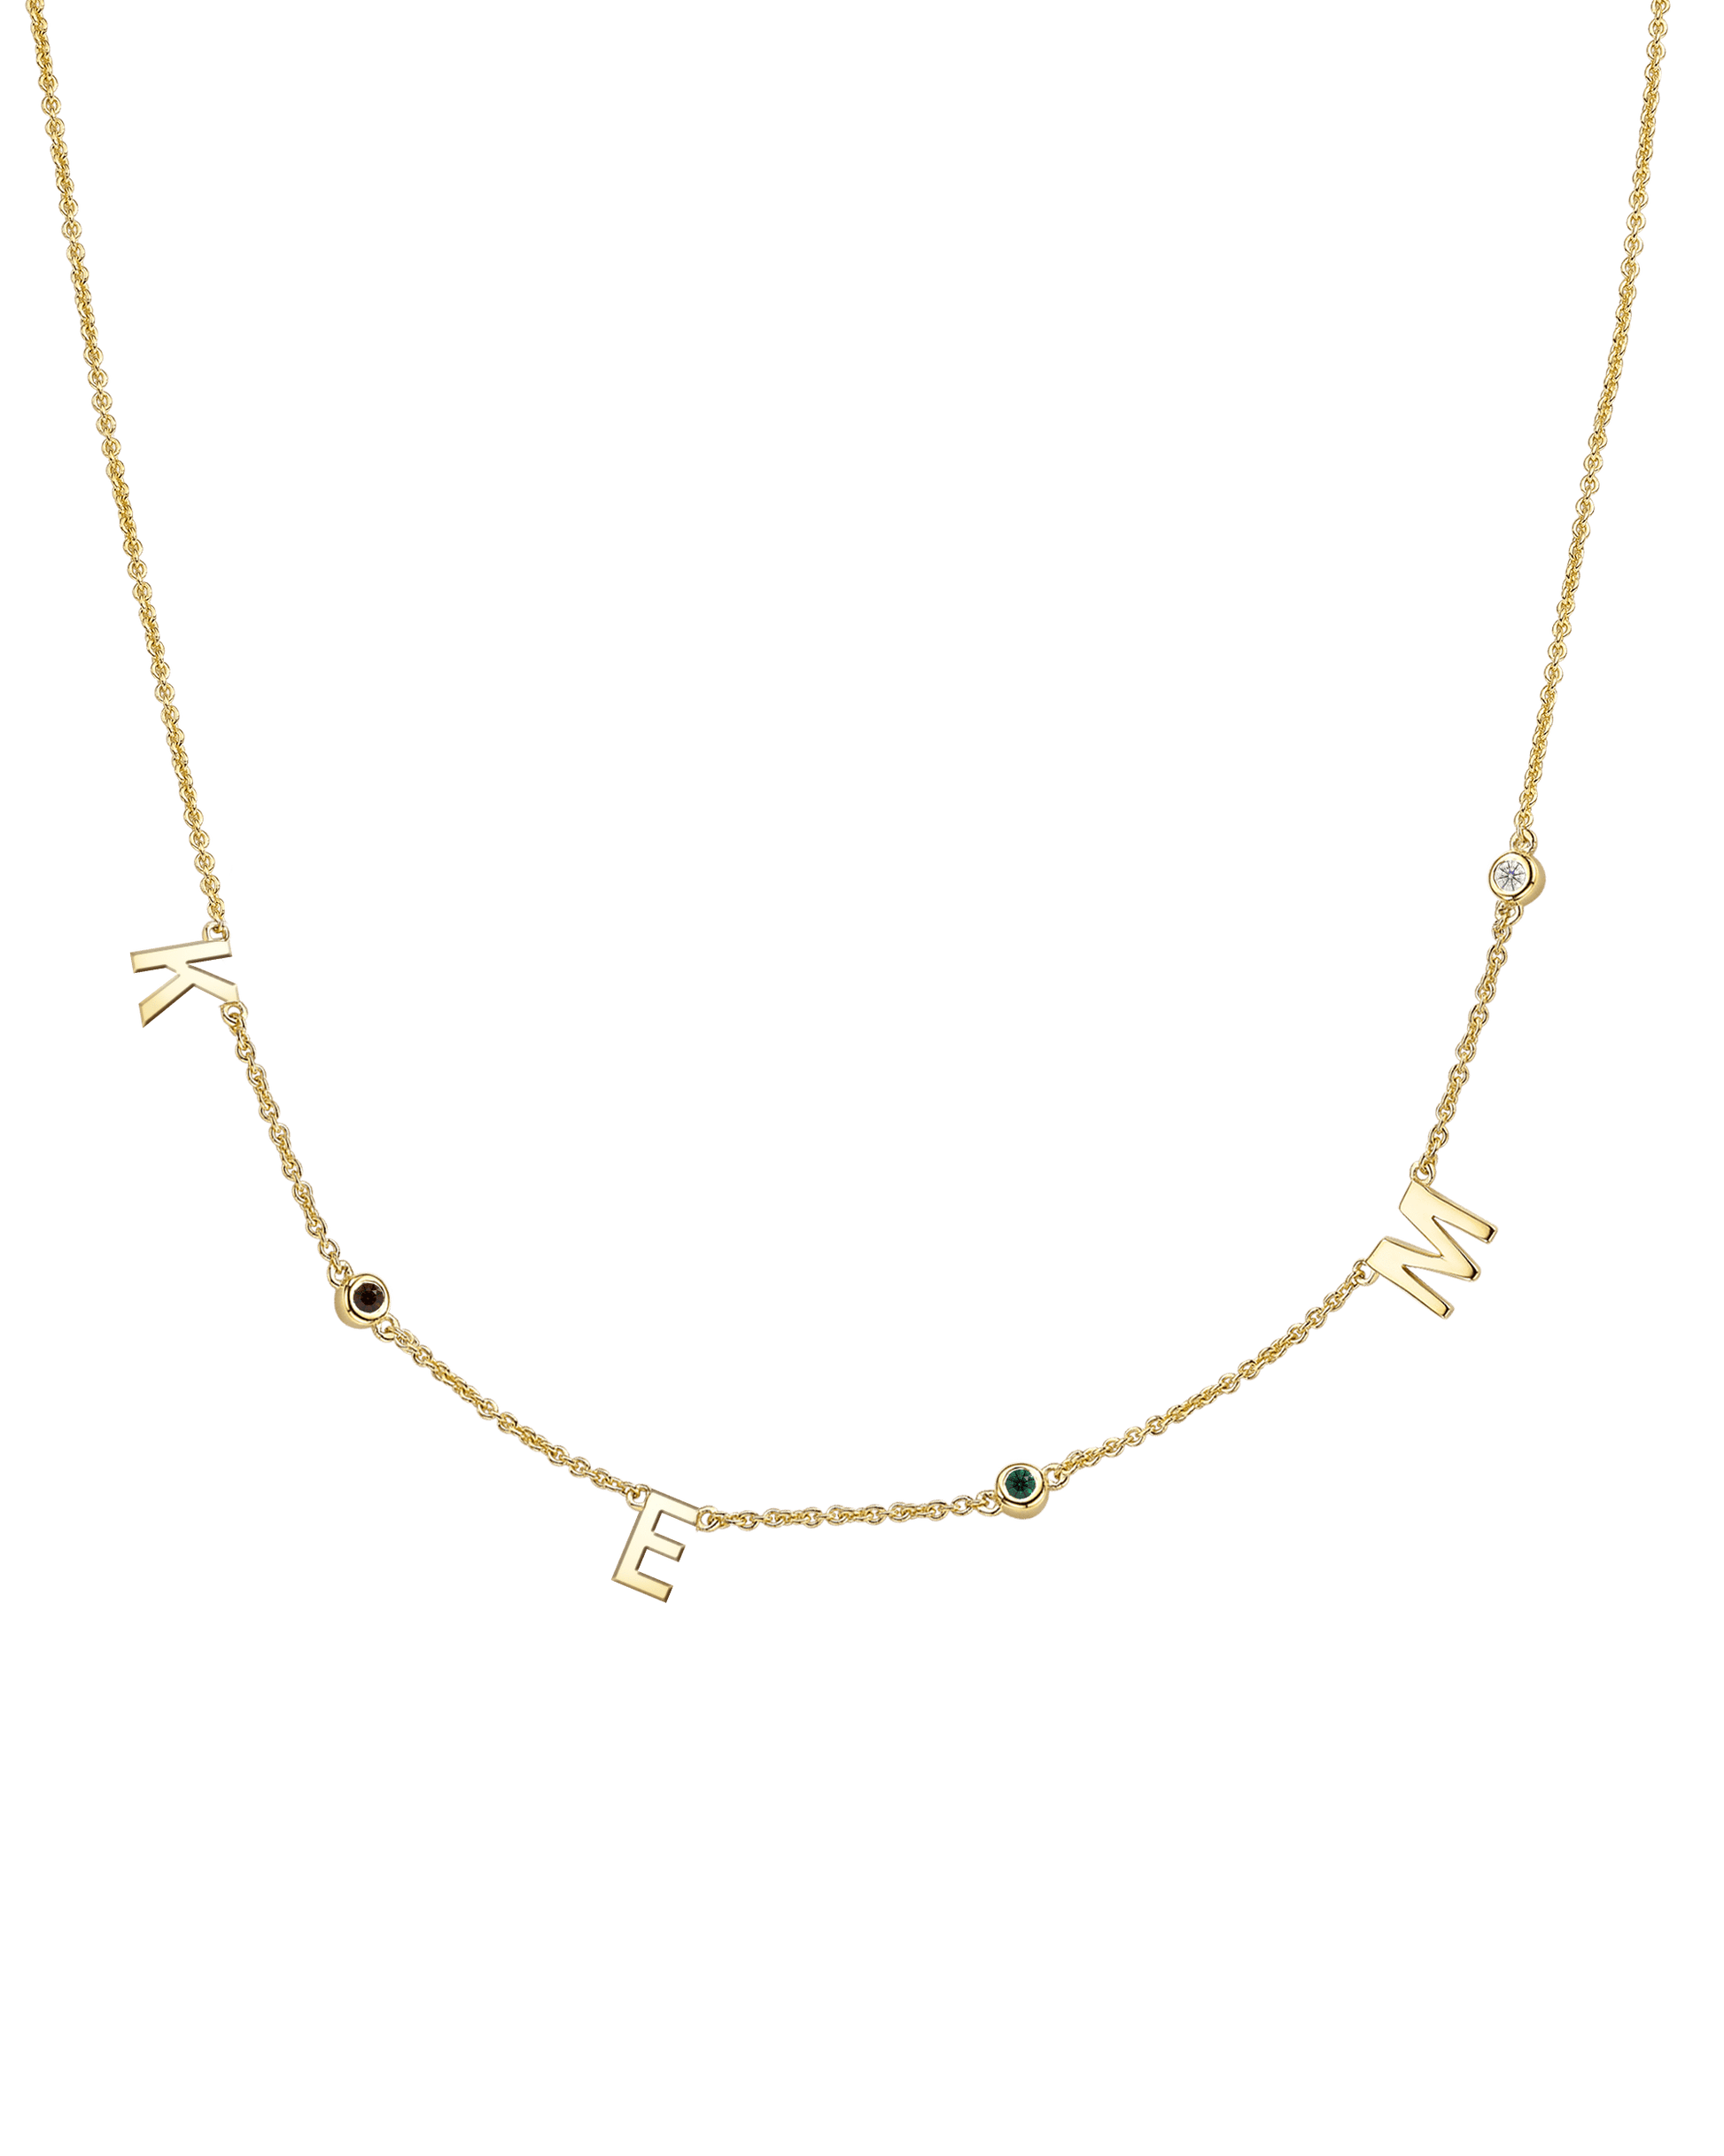 Initial Birthstone Necklace - 18K Gold Vermeil Necklaces magal-dev 3 Initials + 3 Birthstones Adjustable 16-17" (40cm-43cm) 